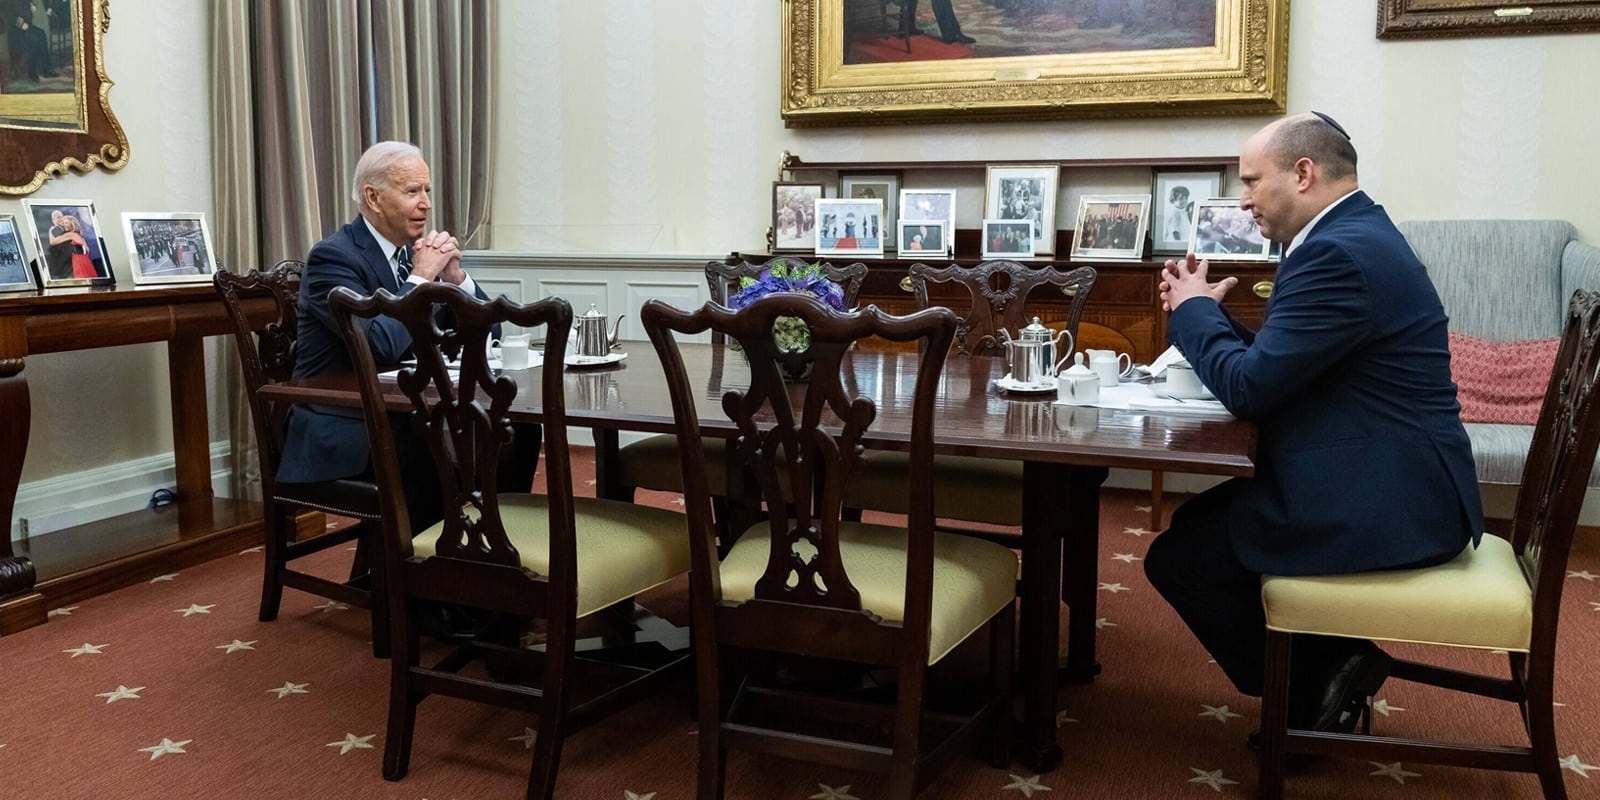 Aug 27, 2021 - Washington, District of Columbia, USA - President Joe Biden has coffee with Israeli Prime Minister Naftali Bennett